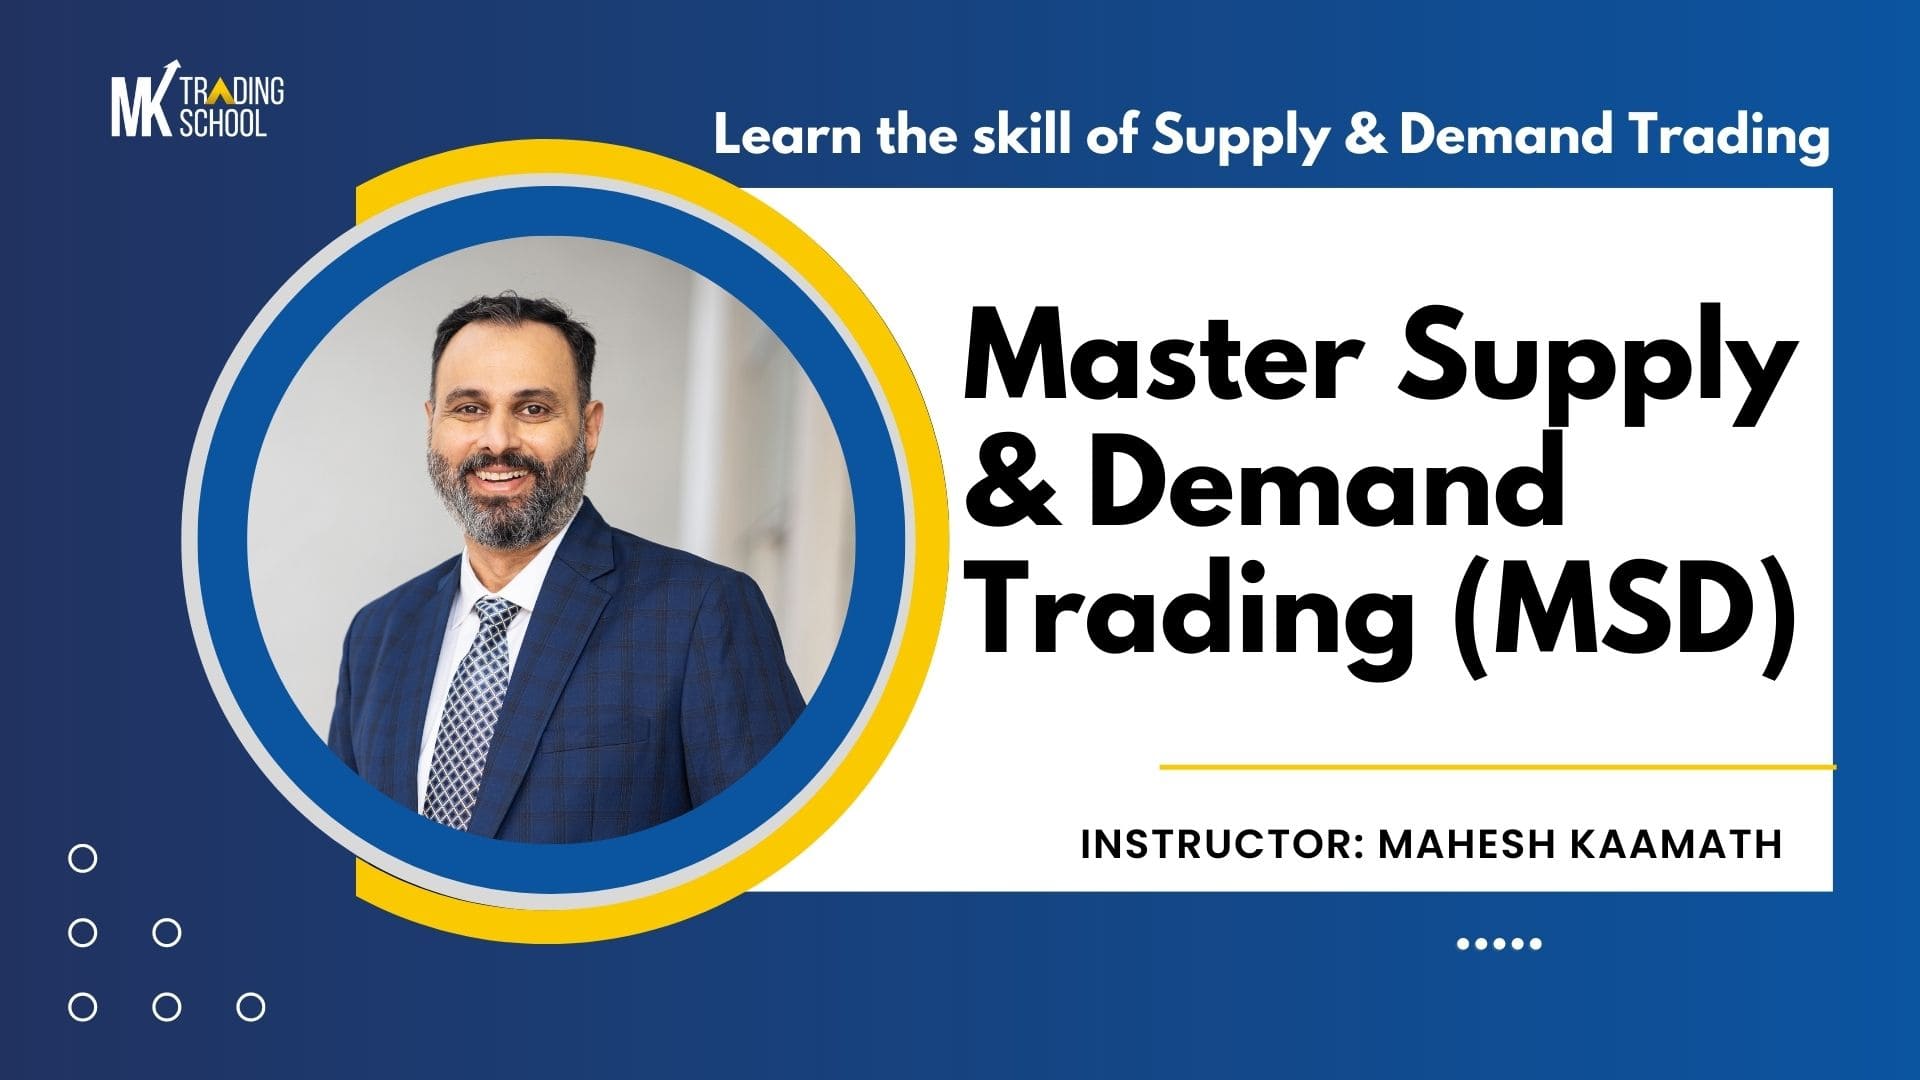 Master Supply & Demand Trading (MSD)